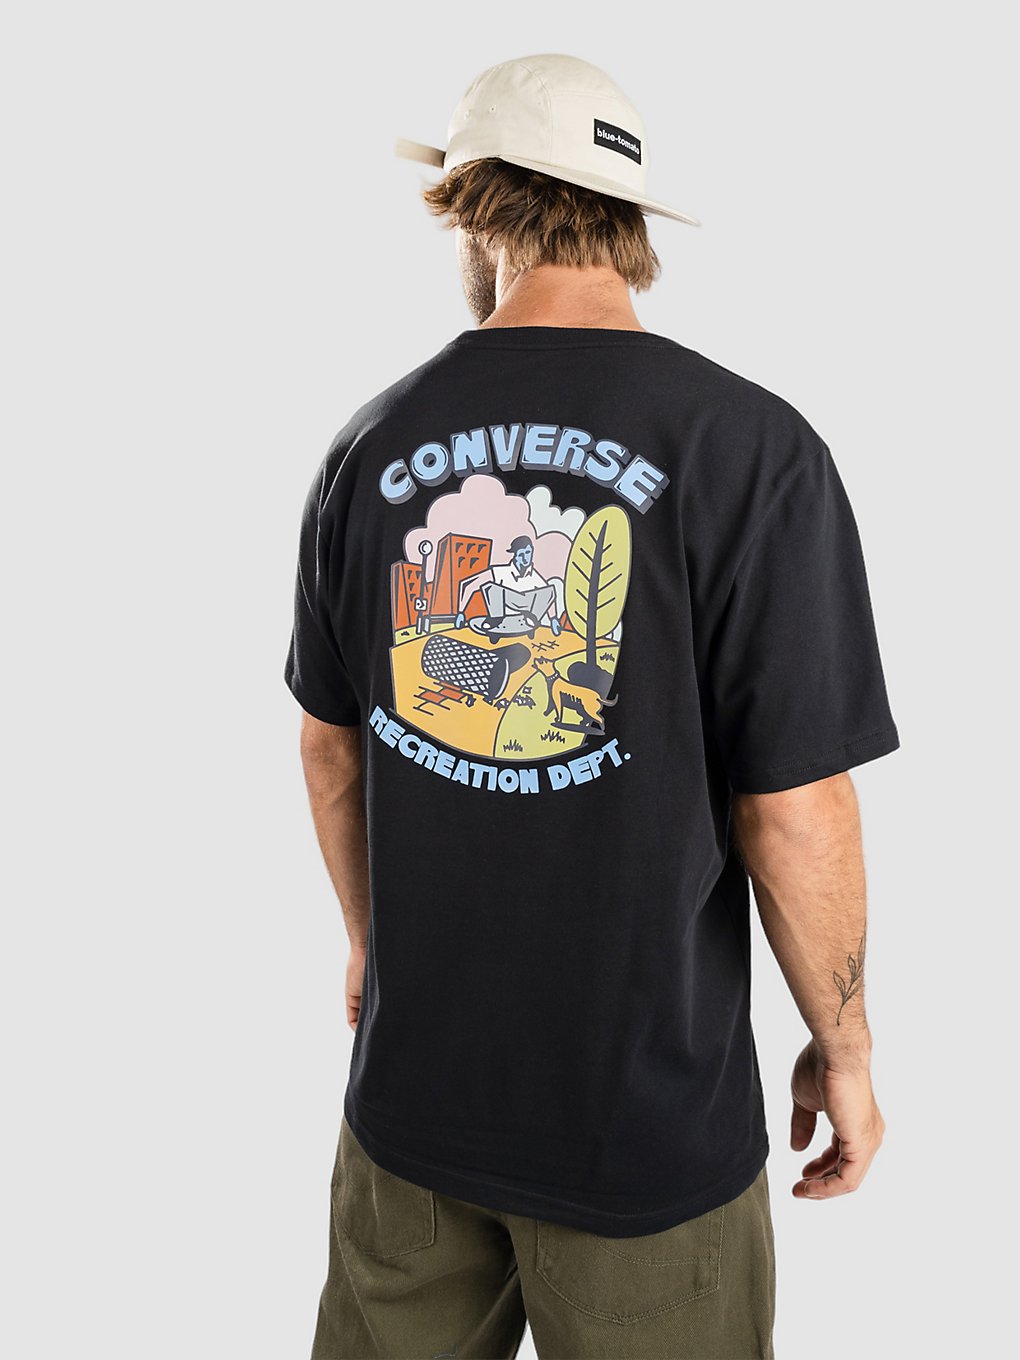 Converse Recreation Department Graphic T-Shirt converse black kaufen